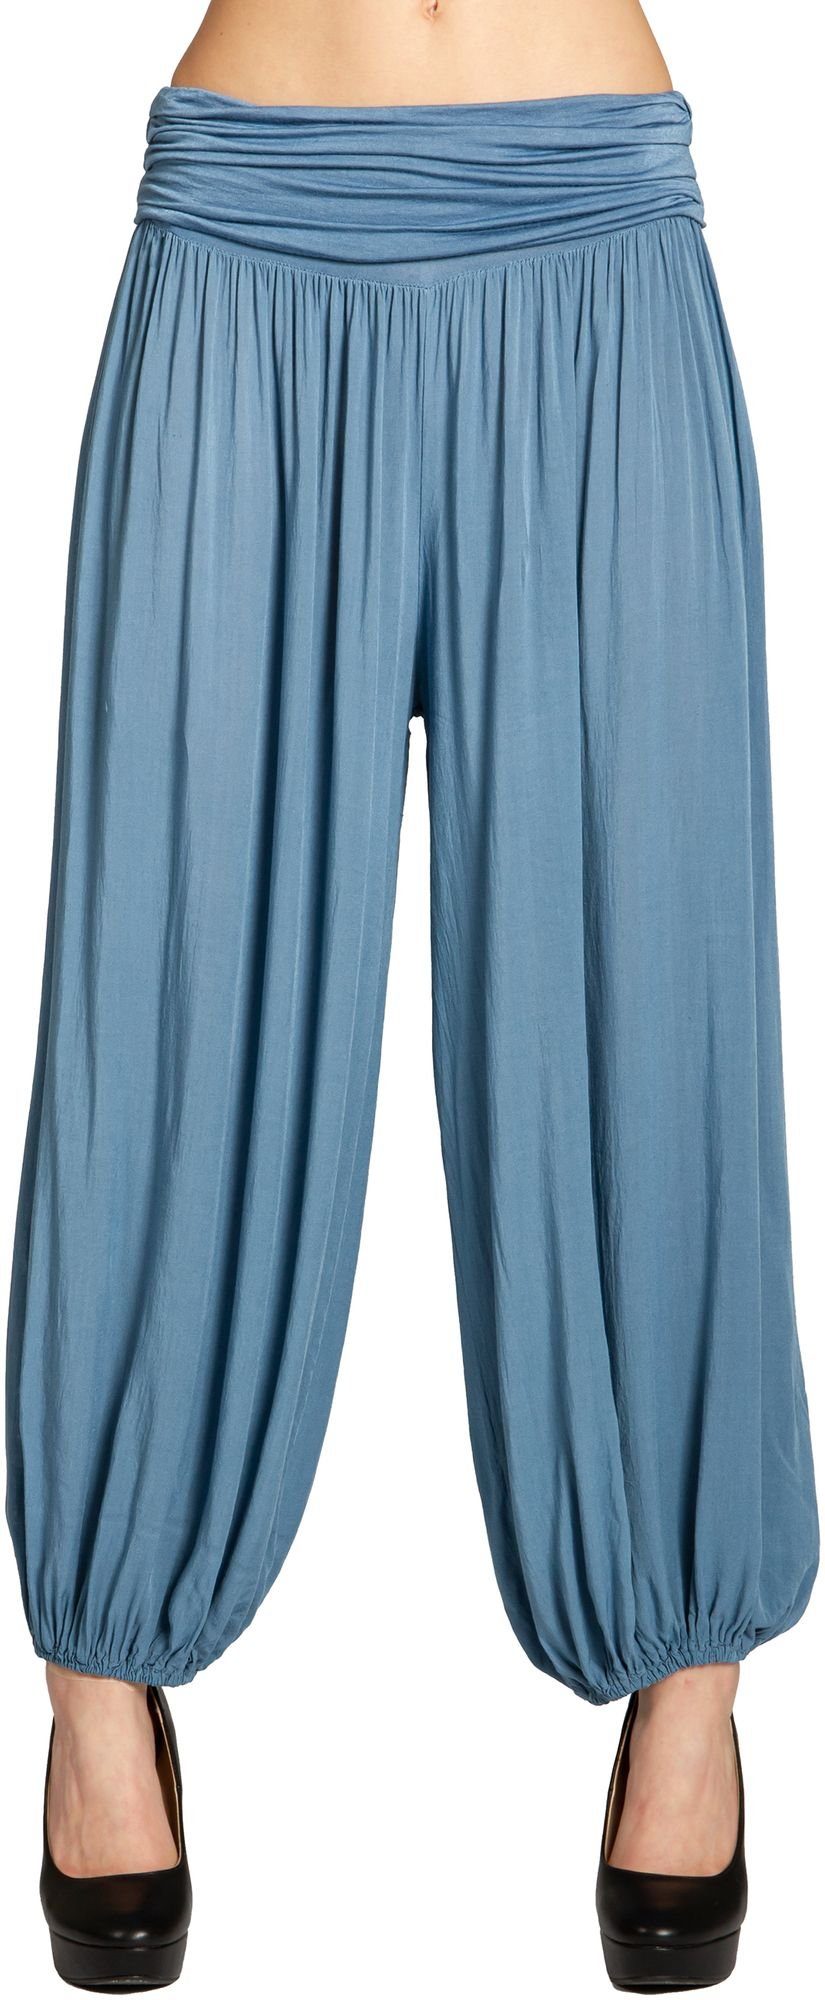 Caspar Stoffhose KHS035 leichte Damen Sommer Haremshose jeans blau | Stoffhosen